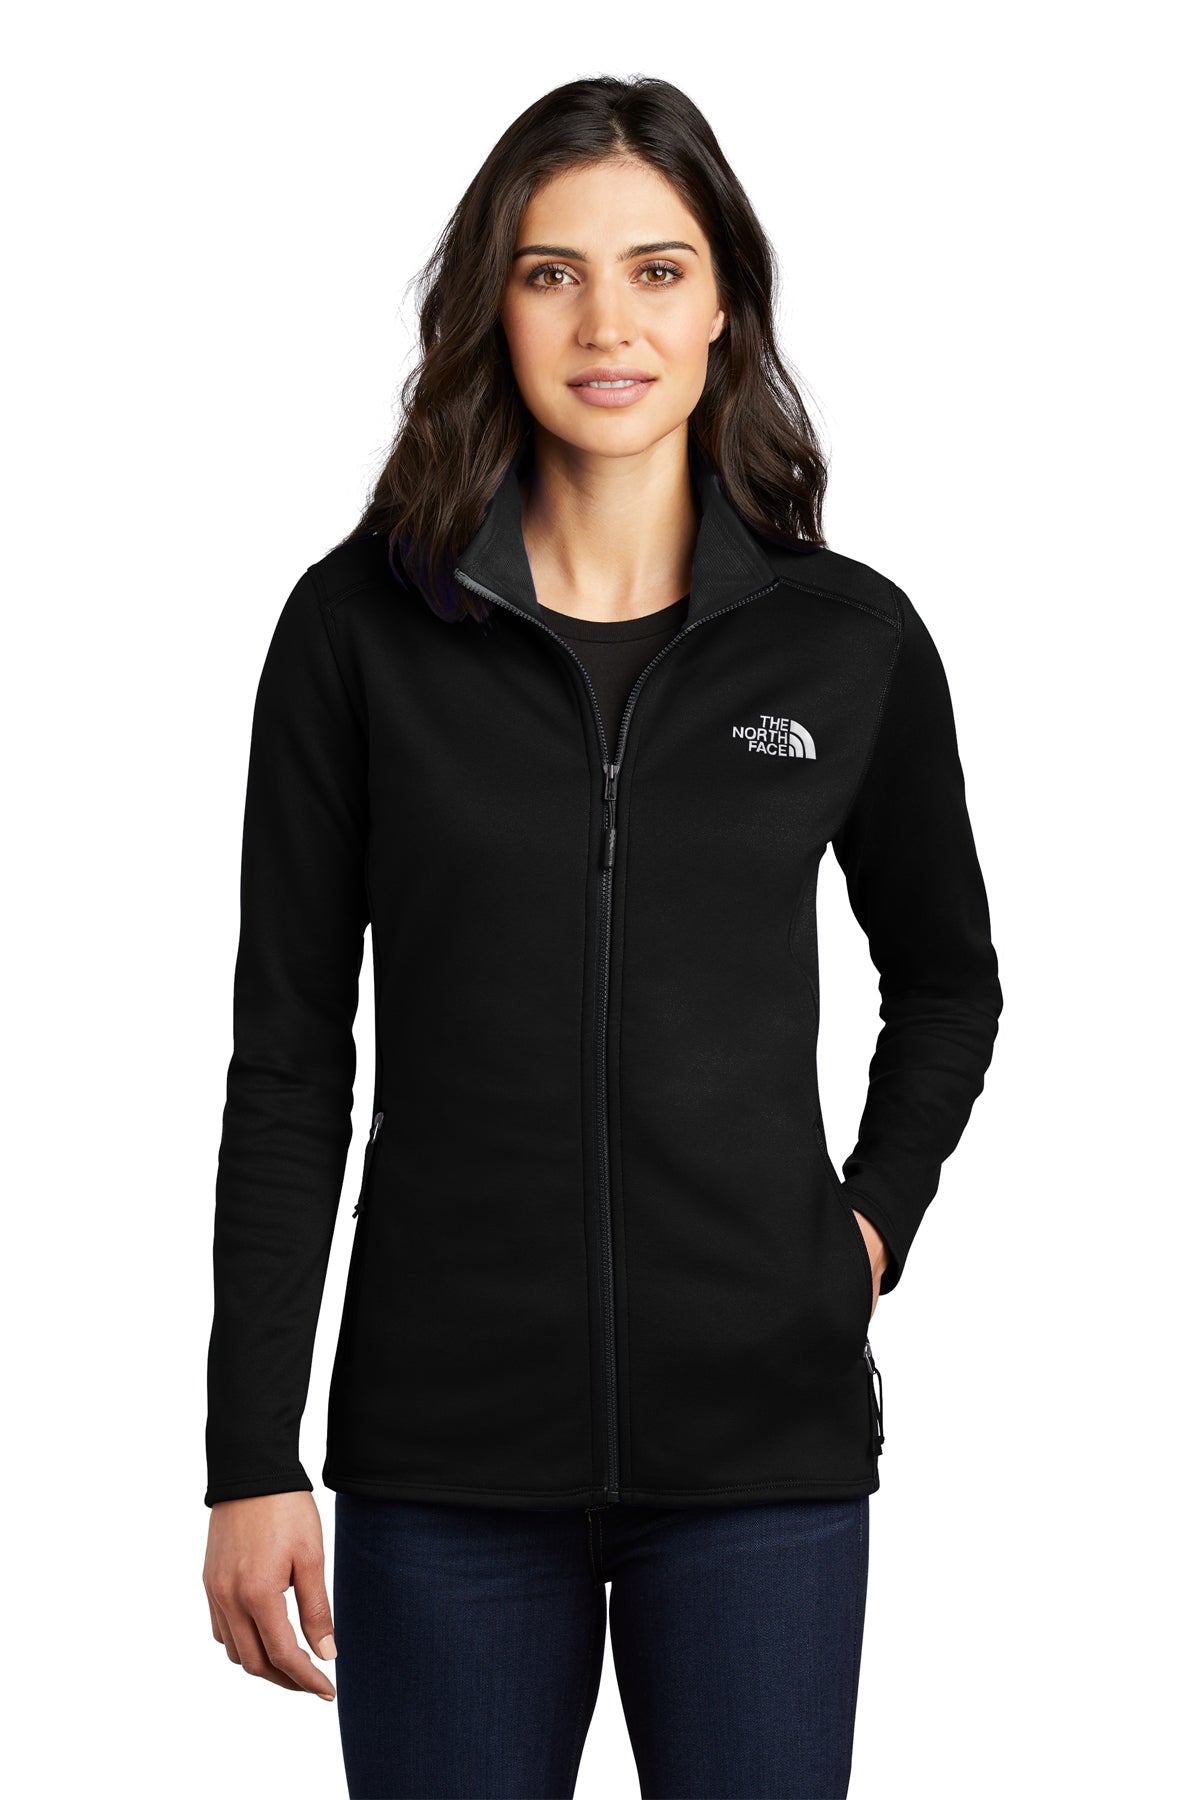 JHU LifeLineNF0A7V62  The North Face ® Ladies Skyline Full-Zip Fleece Jacket